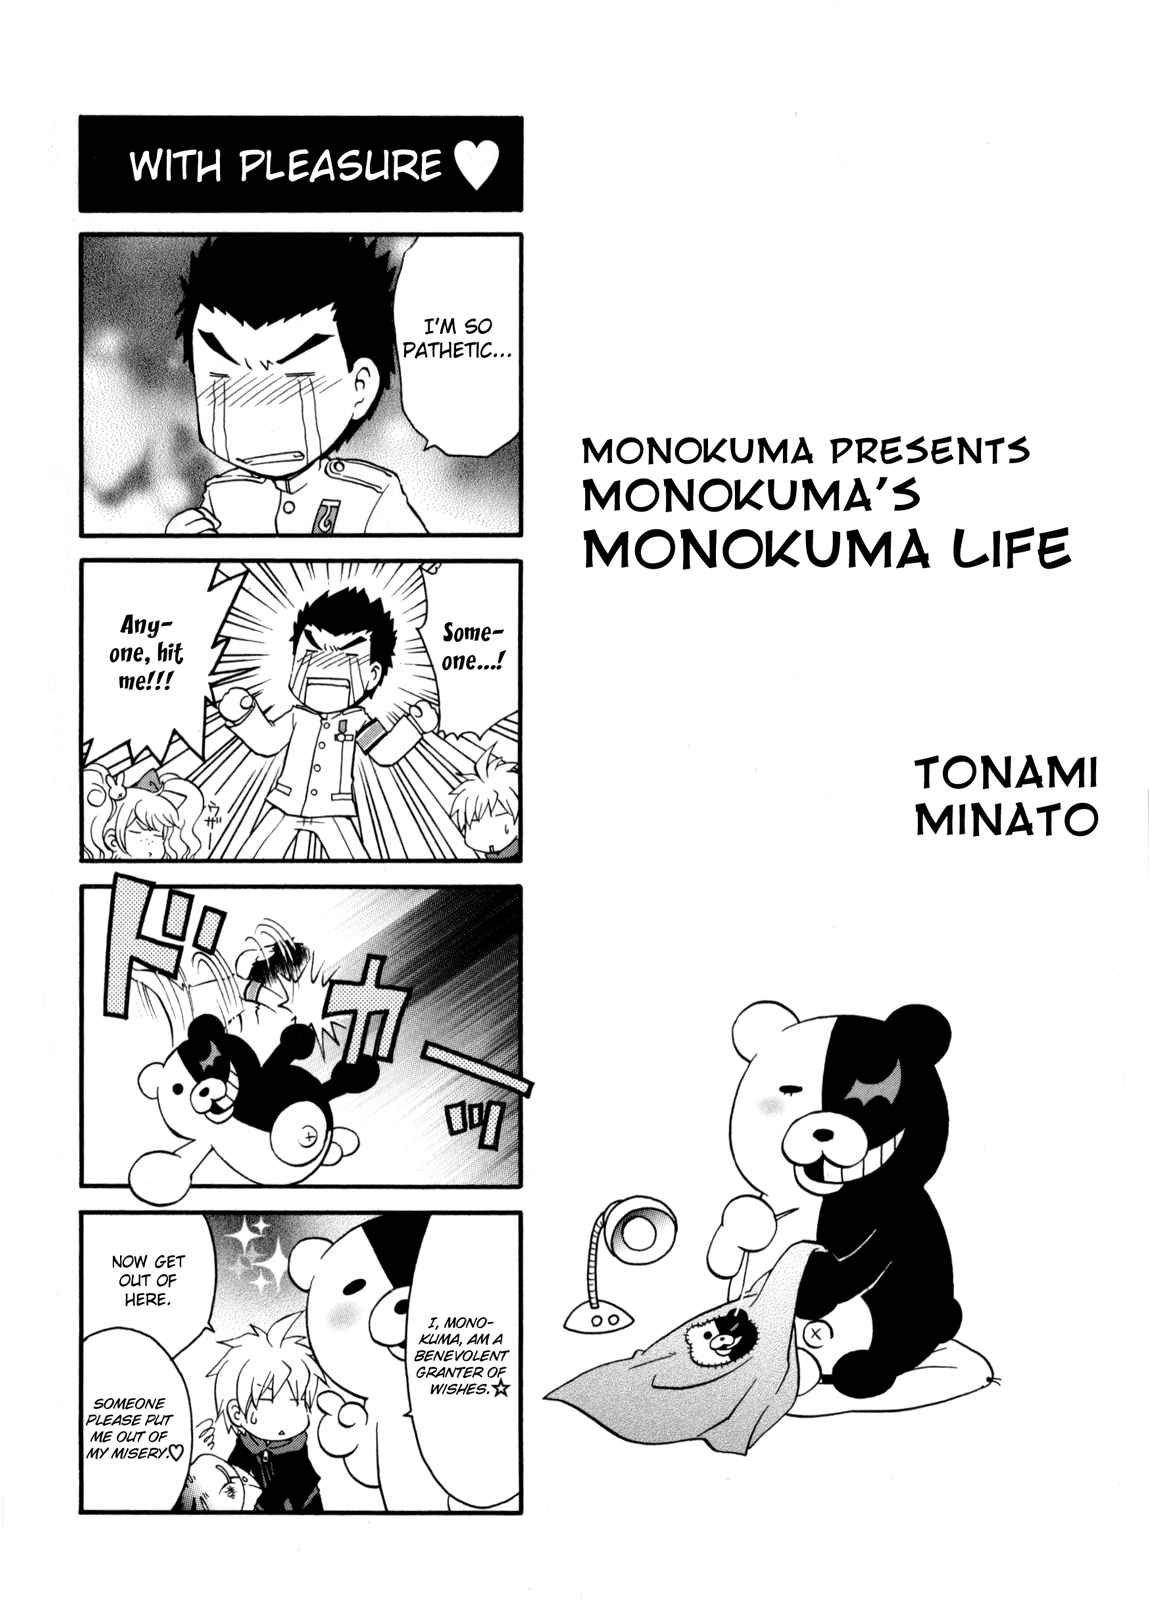 Danganronpa The Academy of Hope and the High School Students of Despair 4 koma Kings Vol. 2 Ch. 14 Monokuma Presents Monokuma's Monokuma Life by Tonami Minato